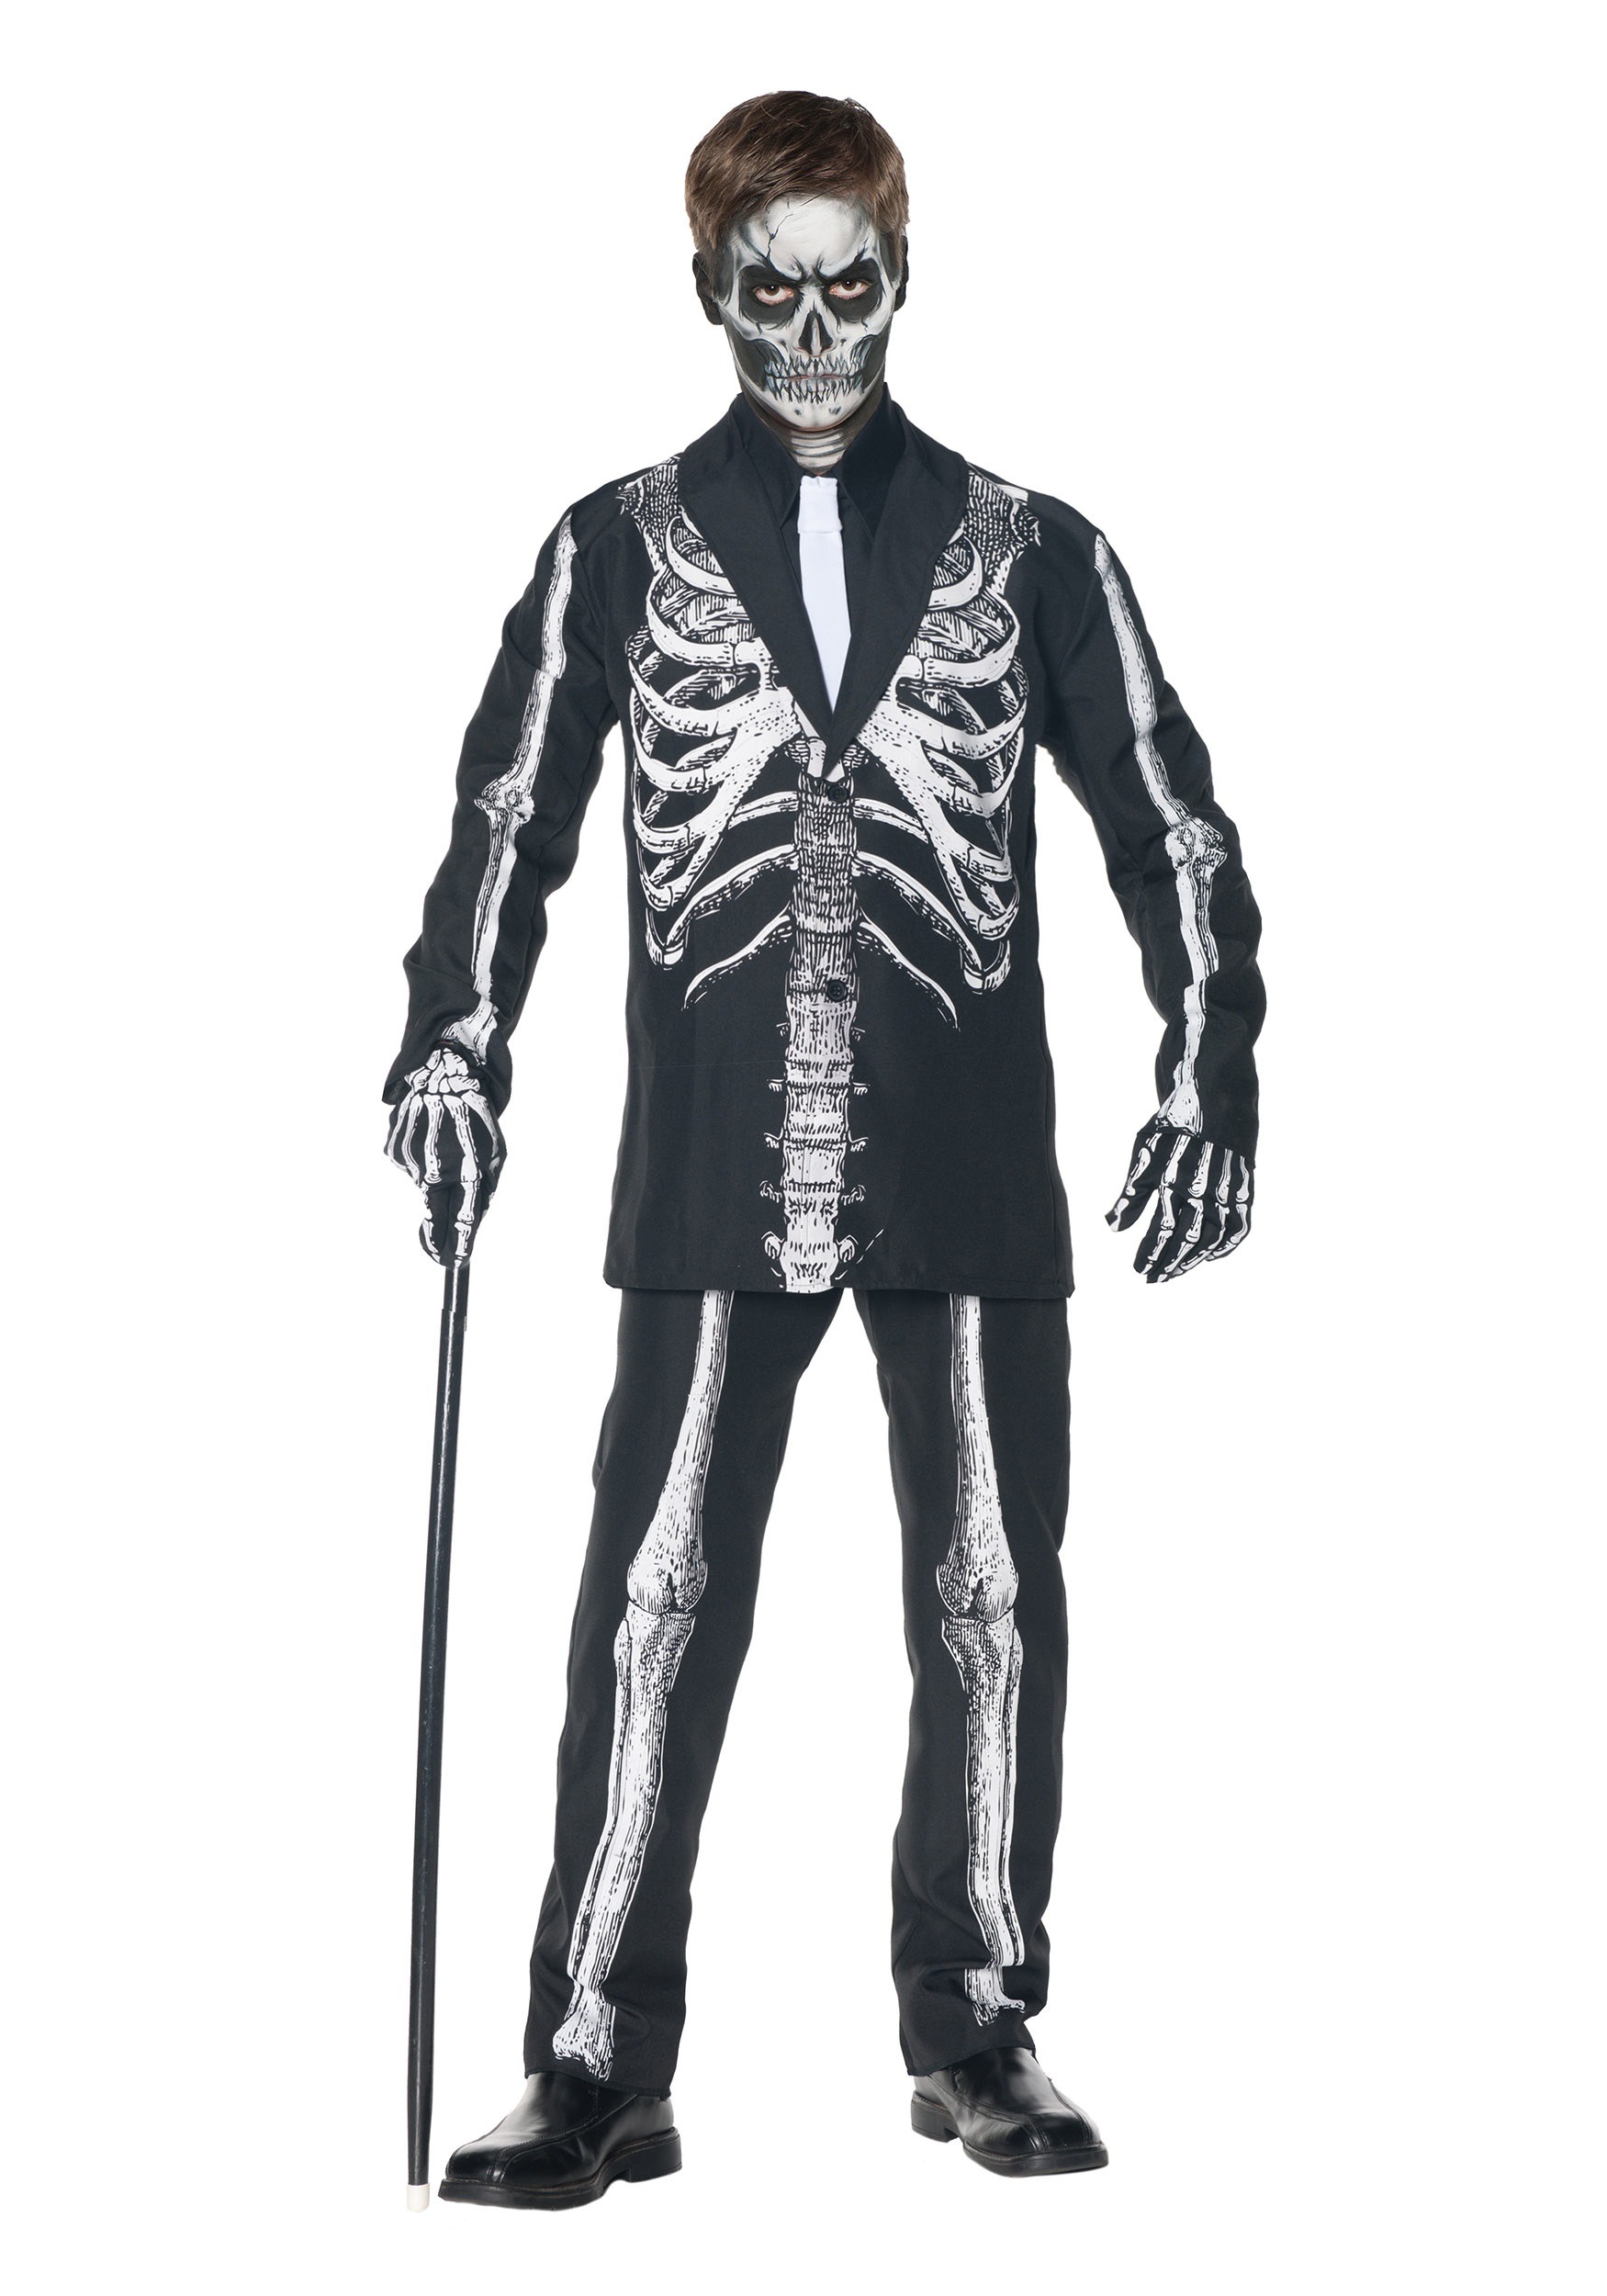 Boy's Skeleton Costume Suit